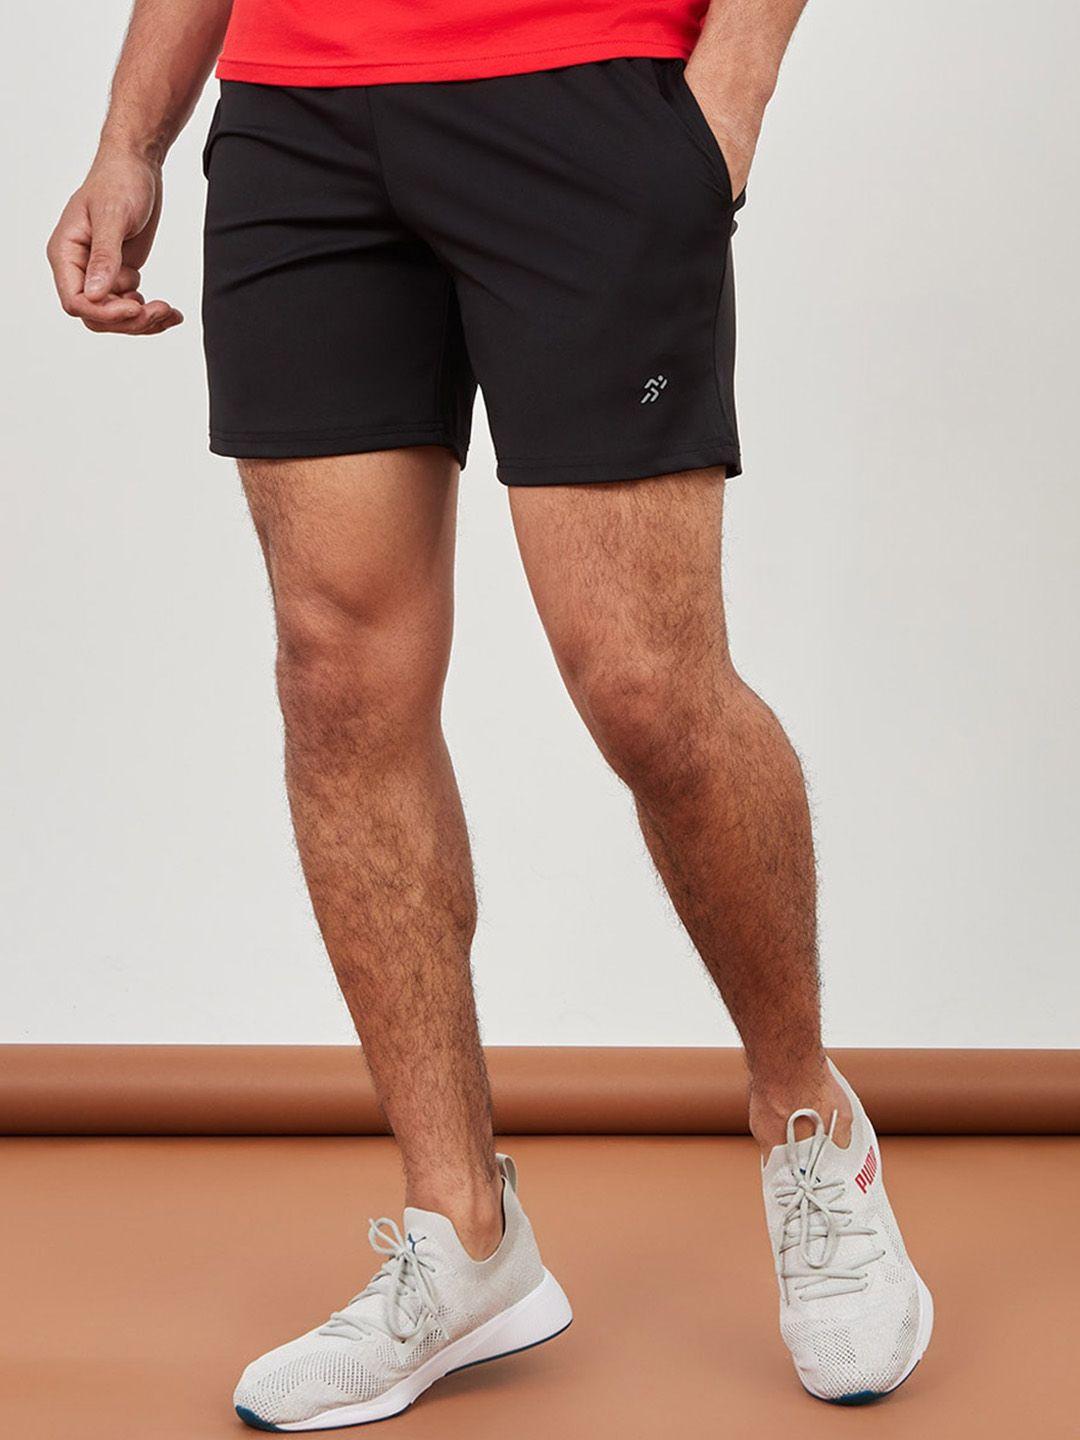 styli men slim fit running sports shorts